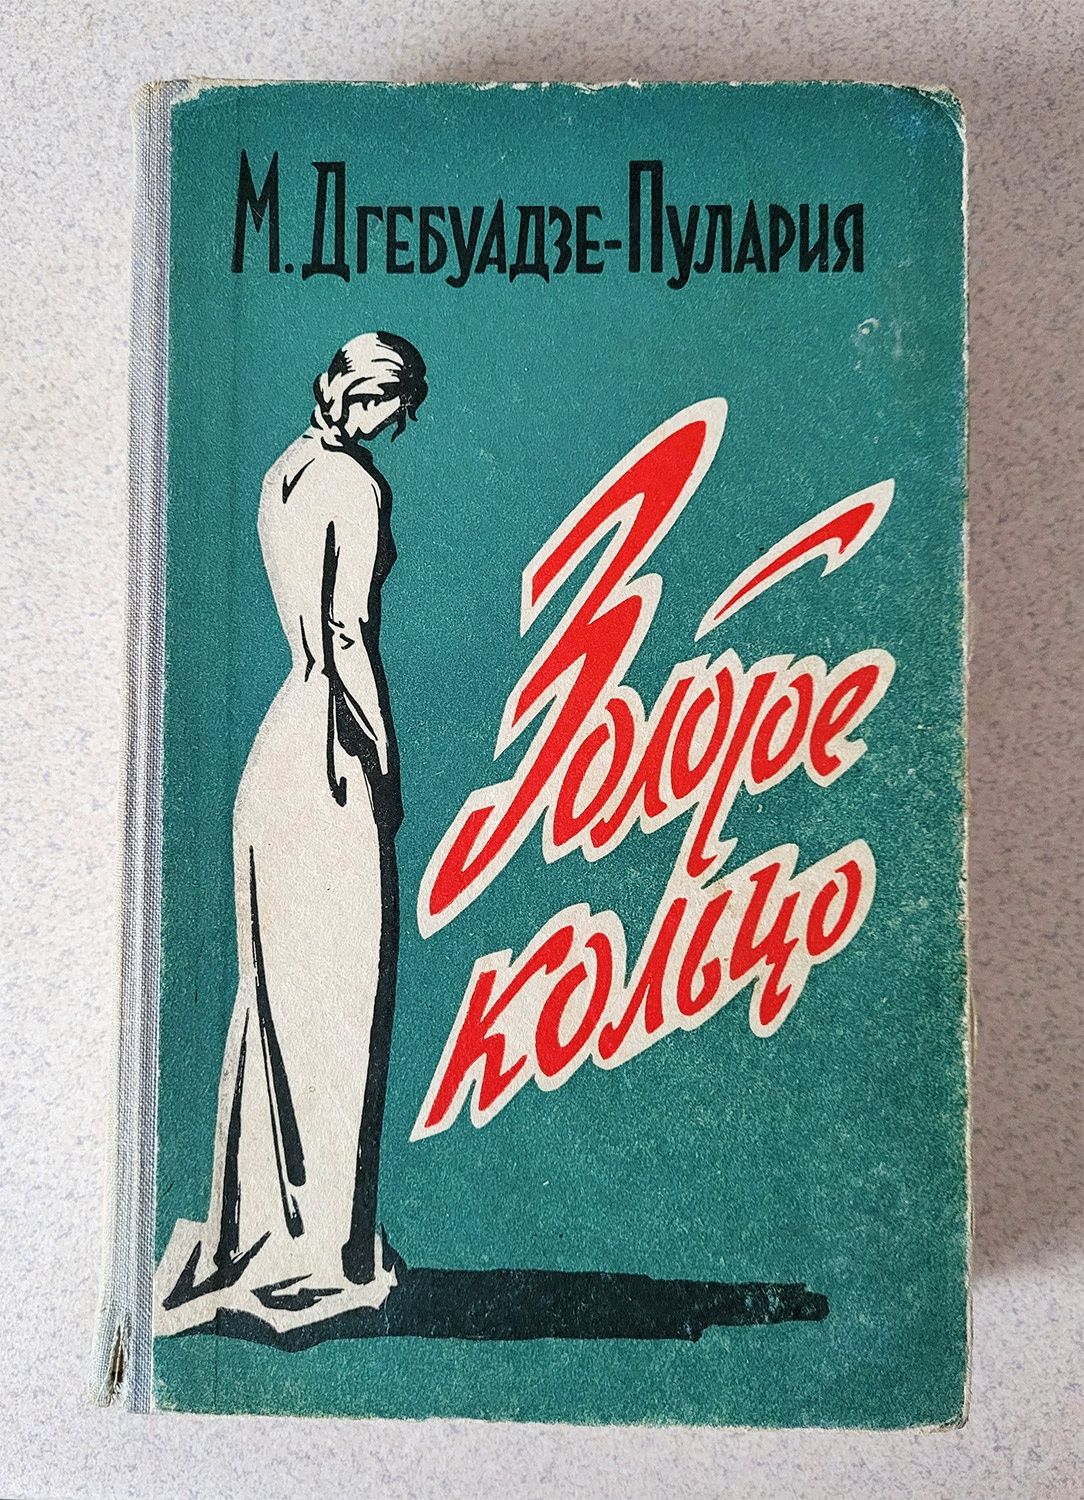 Дгебуадзе-Пулария М. Золотое кольцо. Роман-хроника. 1963 год